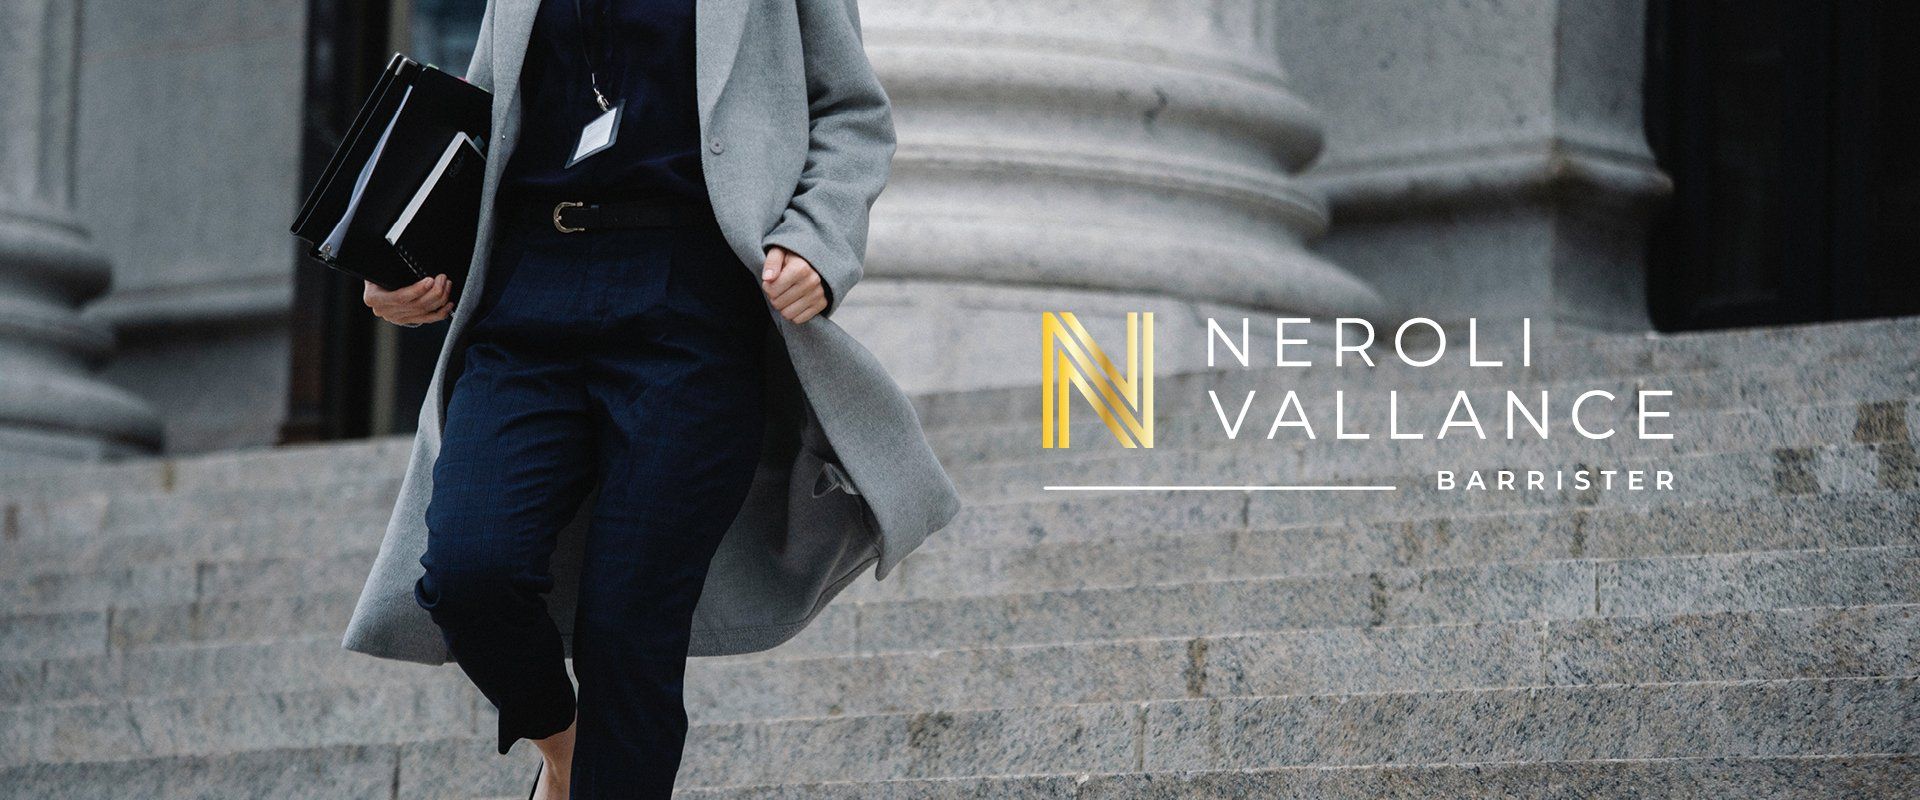 Neroli Vallance Barrister branding by Vanilla Hayes Ltd in Blenheim, New Zealand